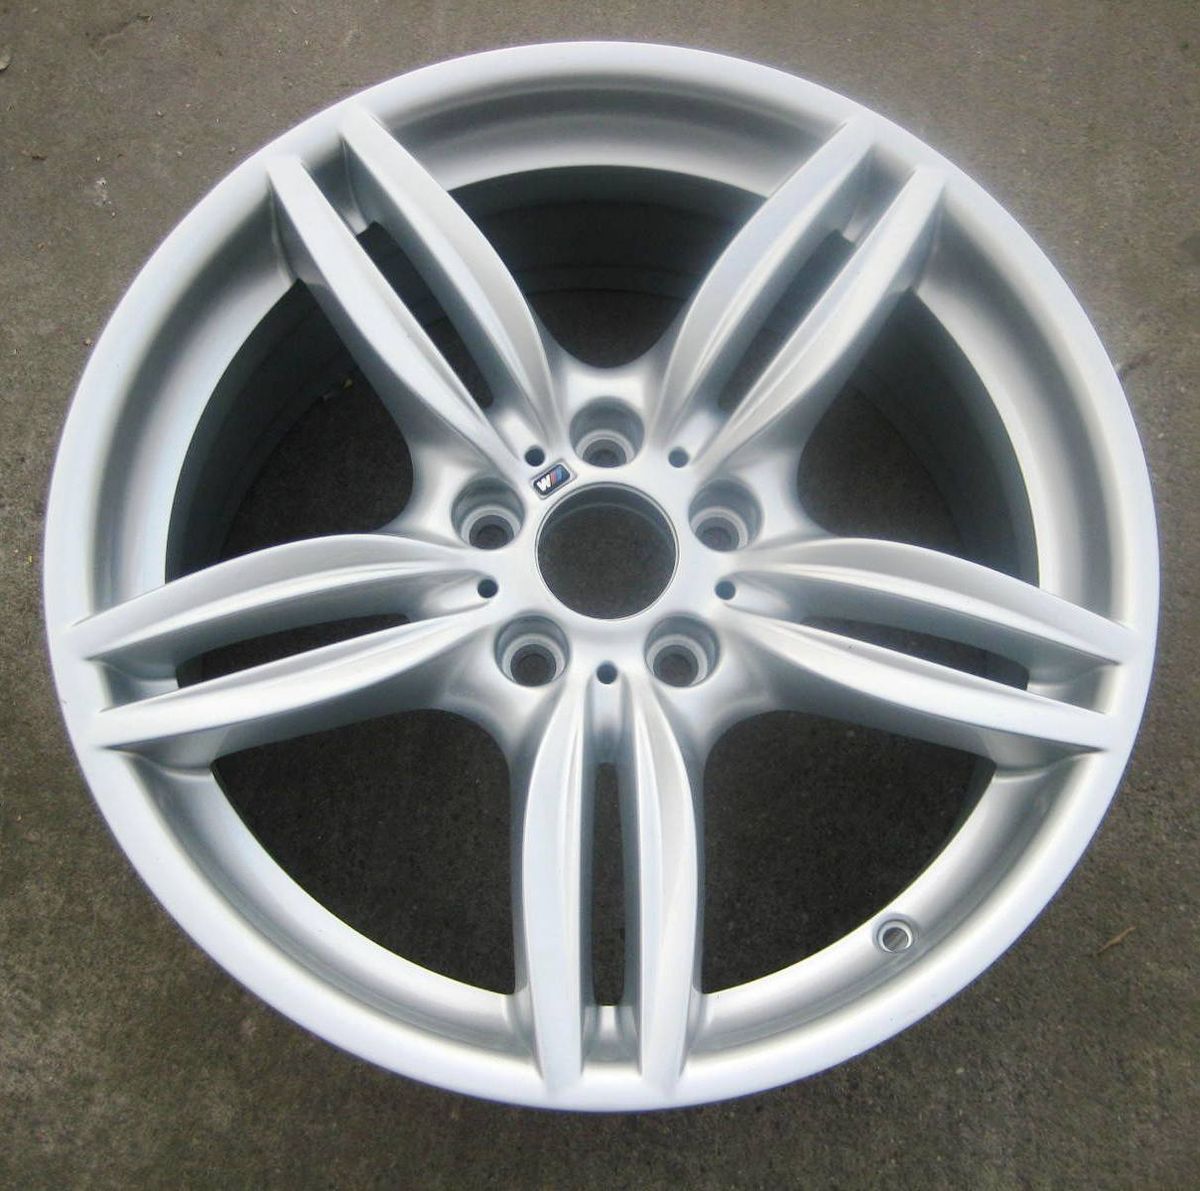 535i 550i 19x8.5 Style #351 2011 Factory OEM Stock M Wheel Rim 71414